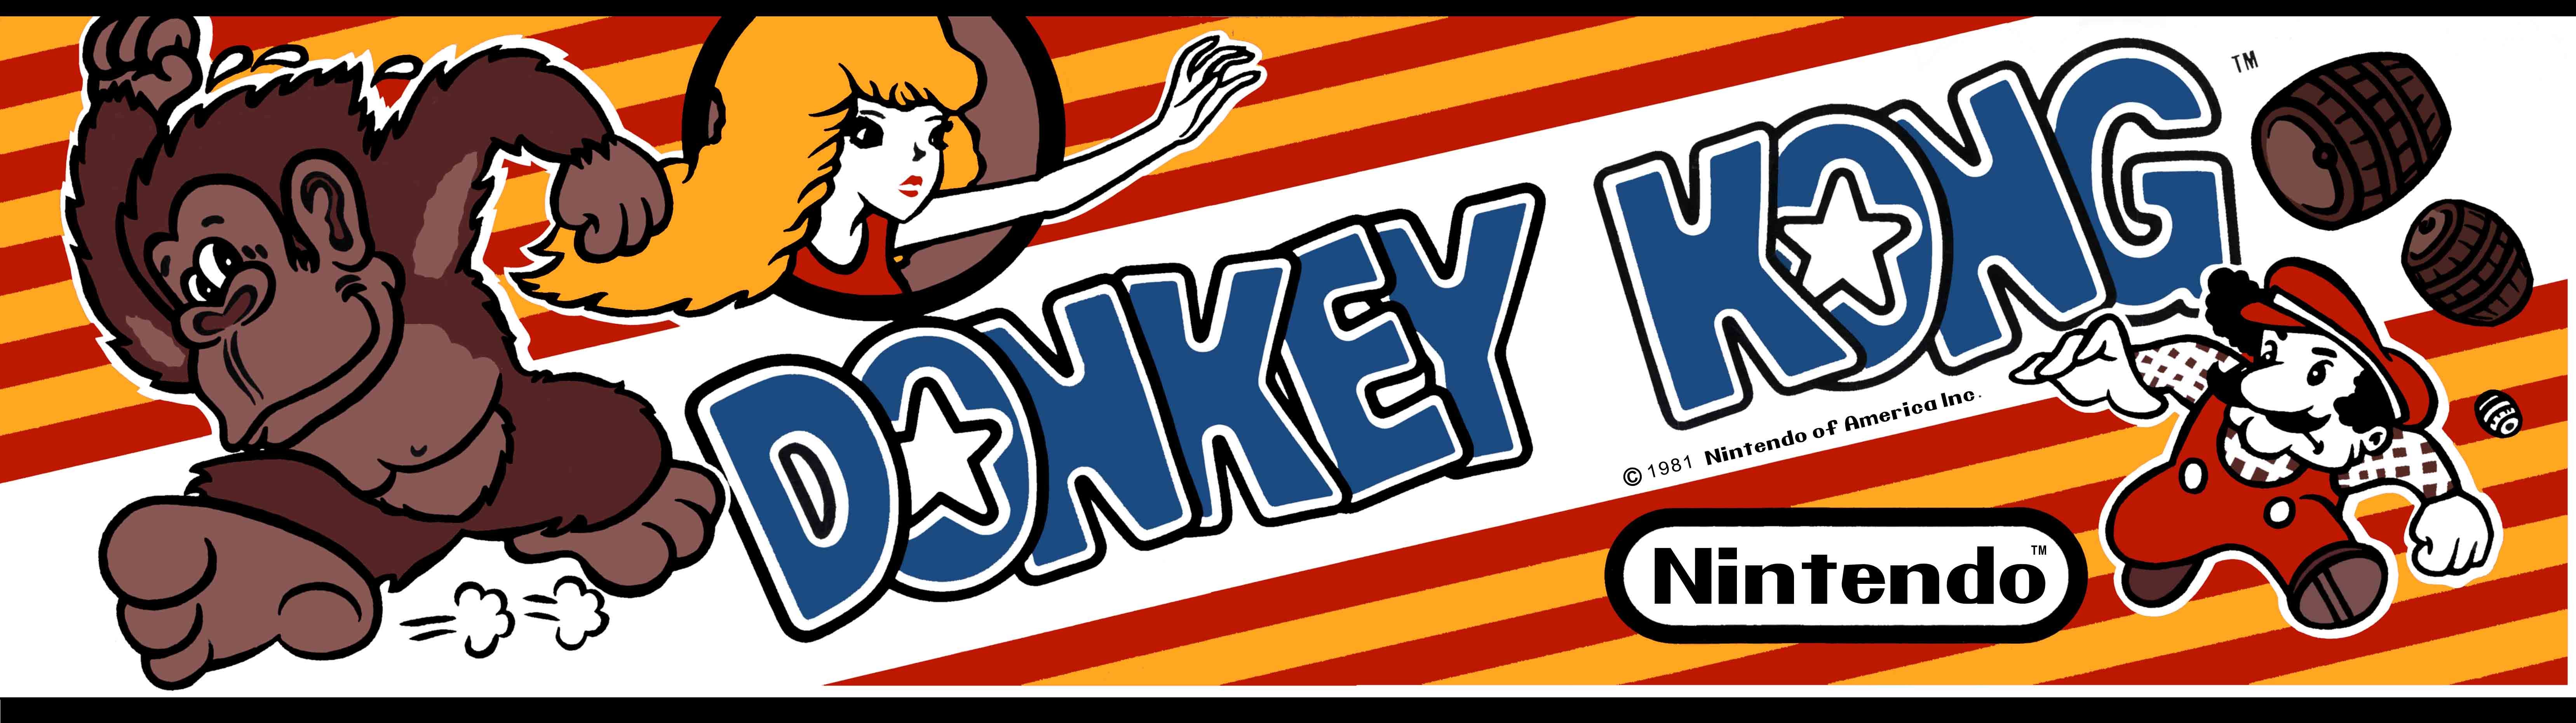 Donkey Kong (Marquee) (Museum RetroGames e. V. CC BY-NC-SA)